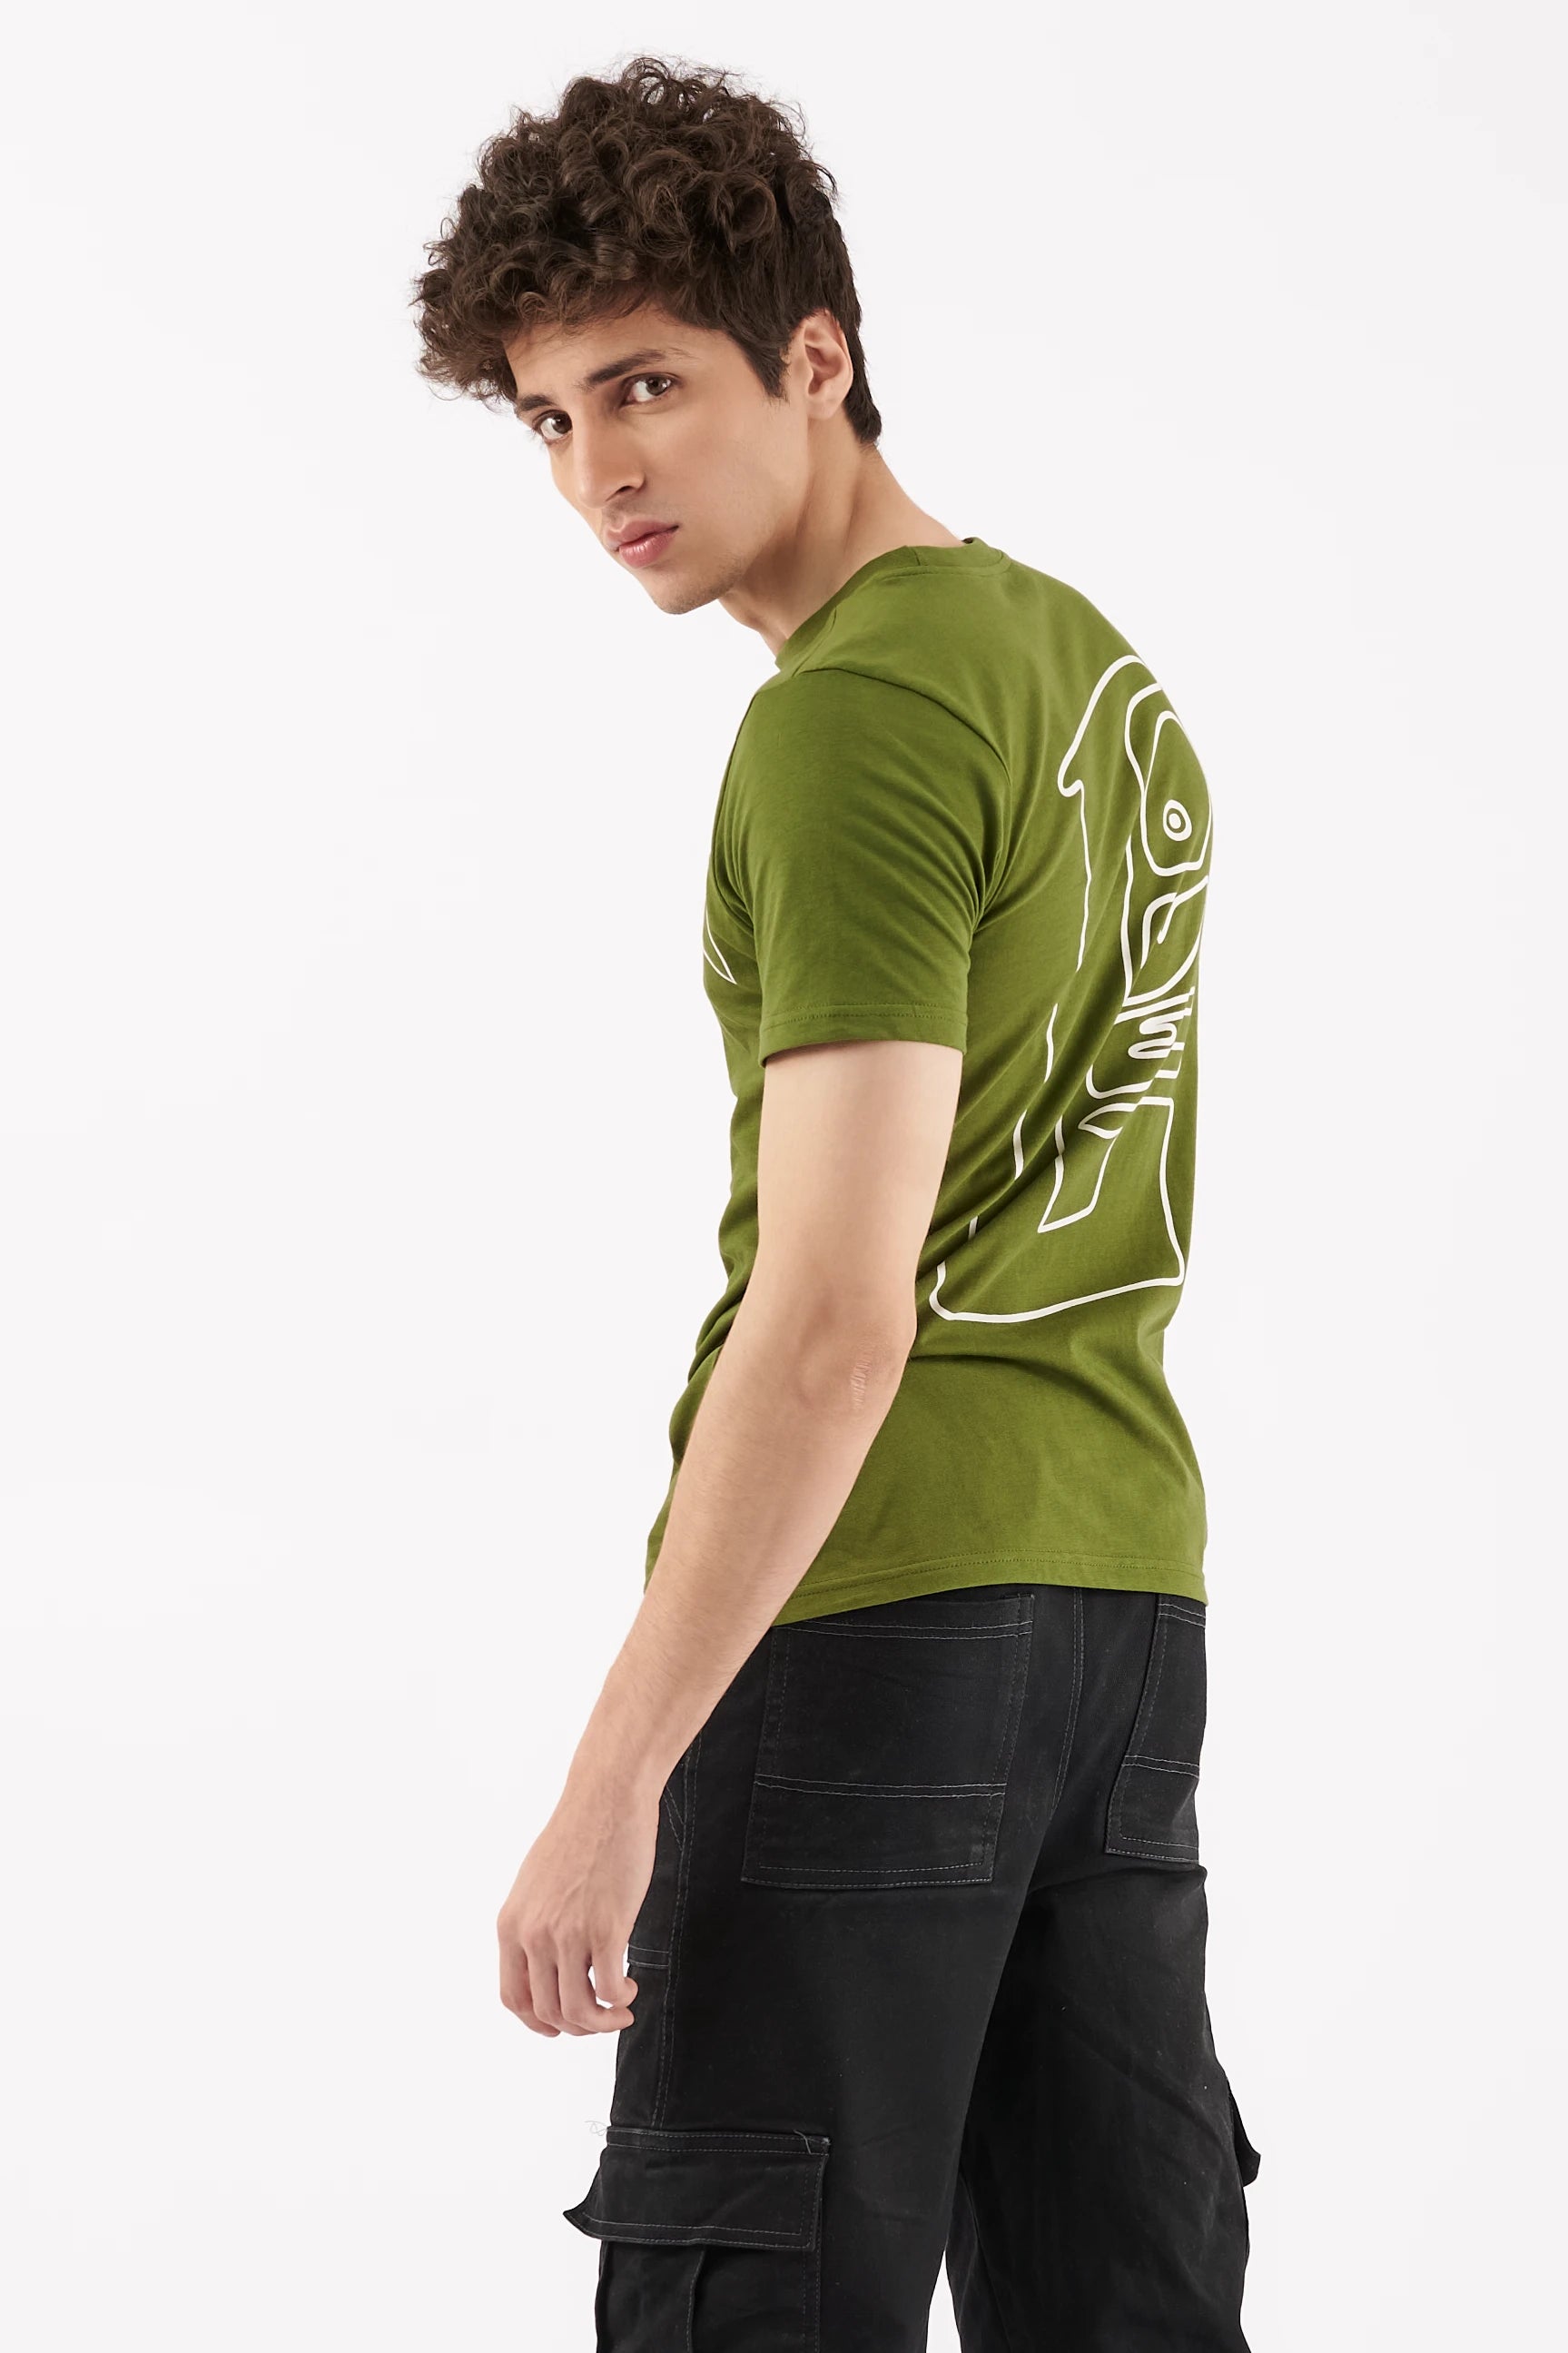 Men's Screen Print T-Shirt Olive Green